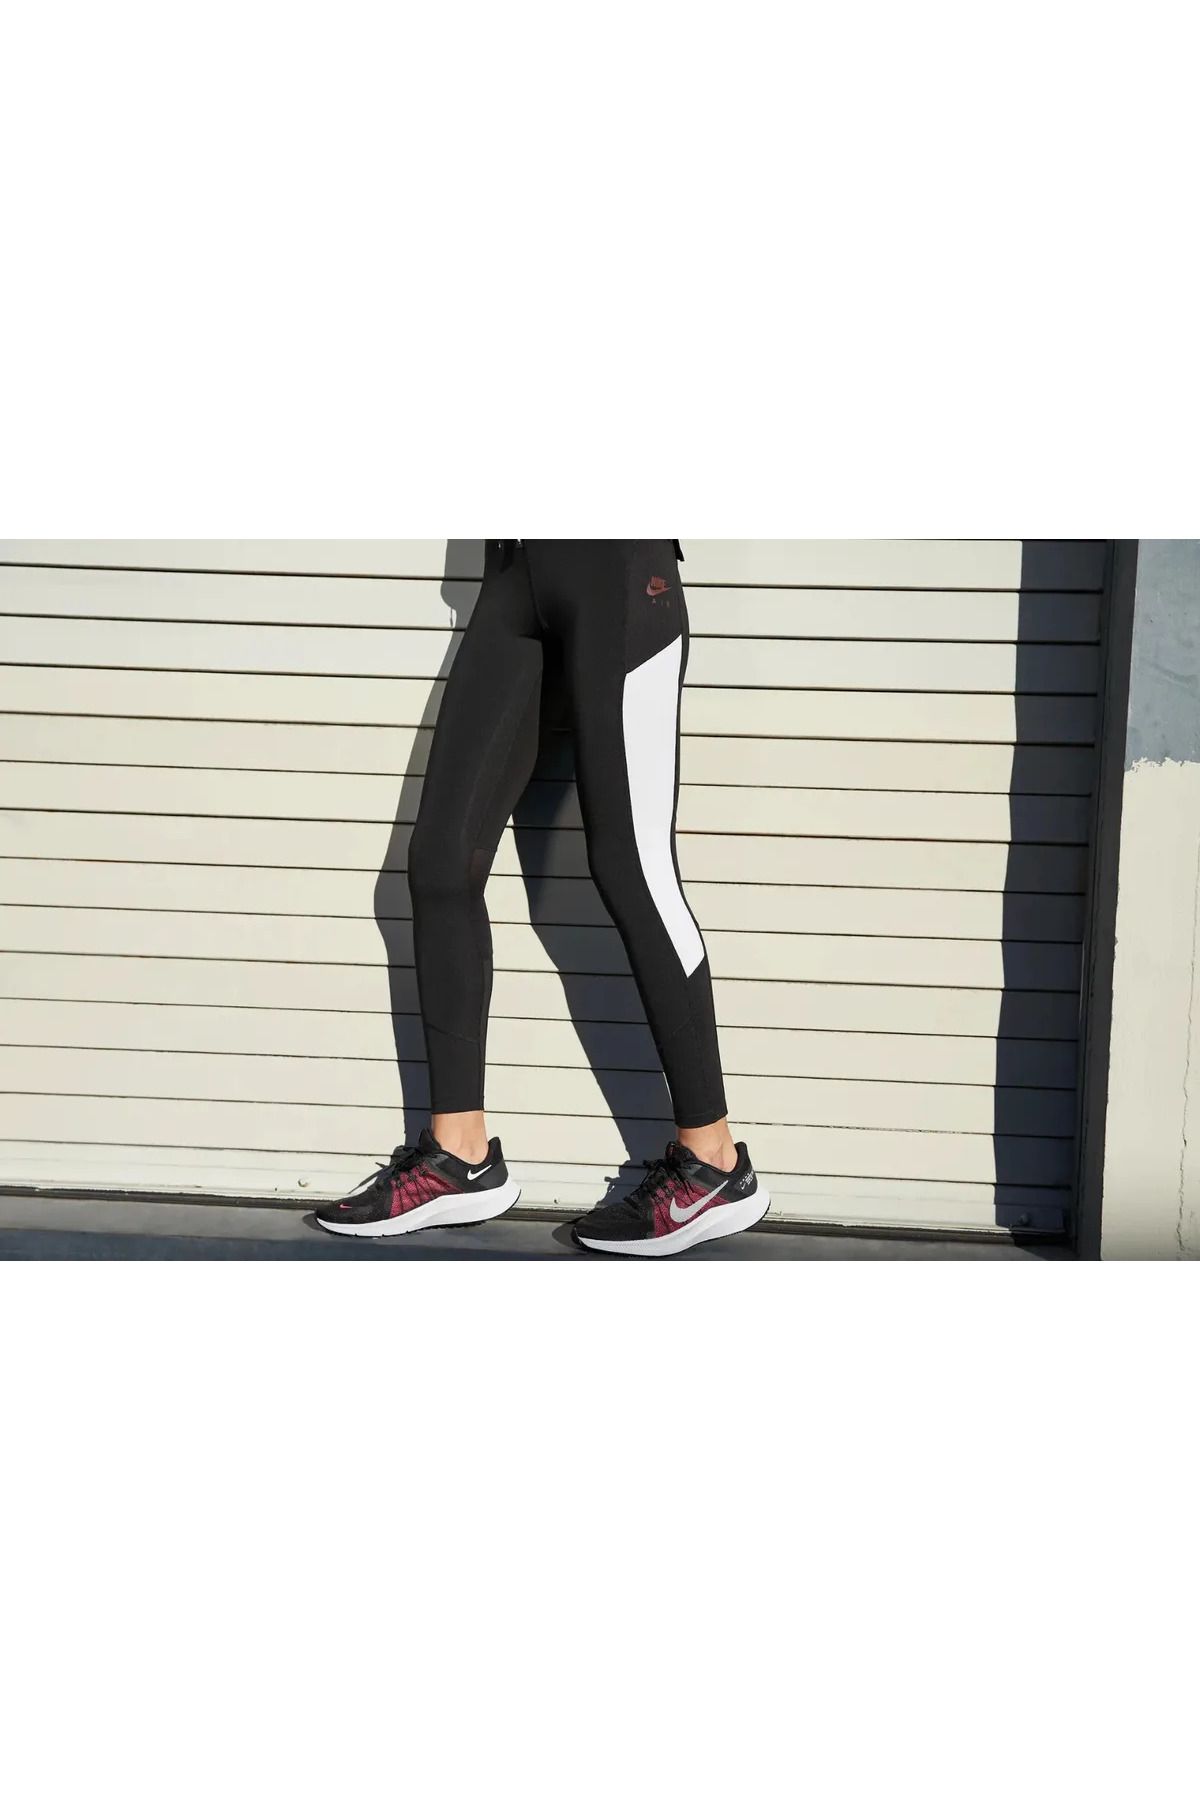 Nike women's running tights